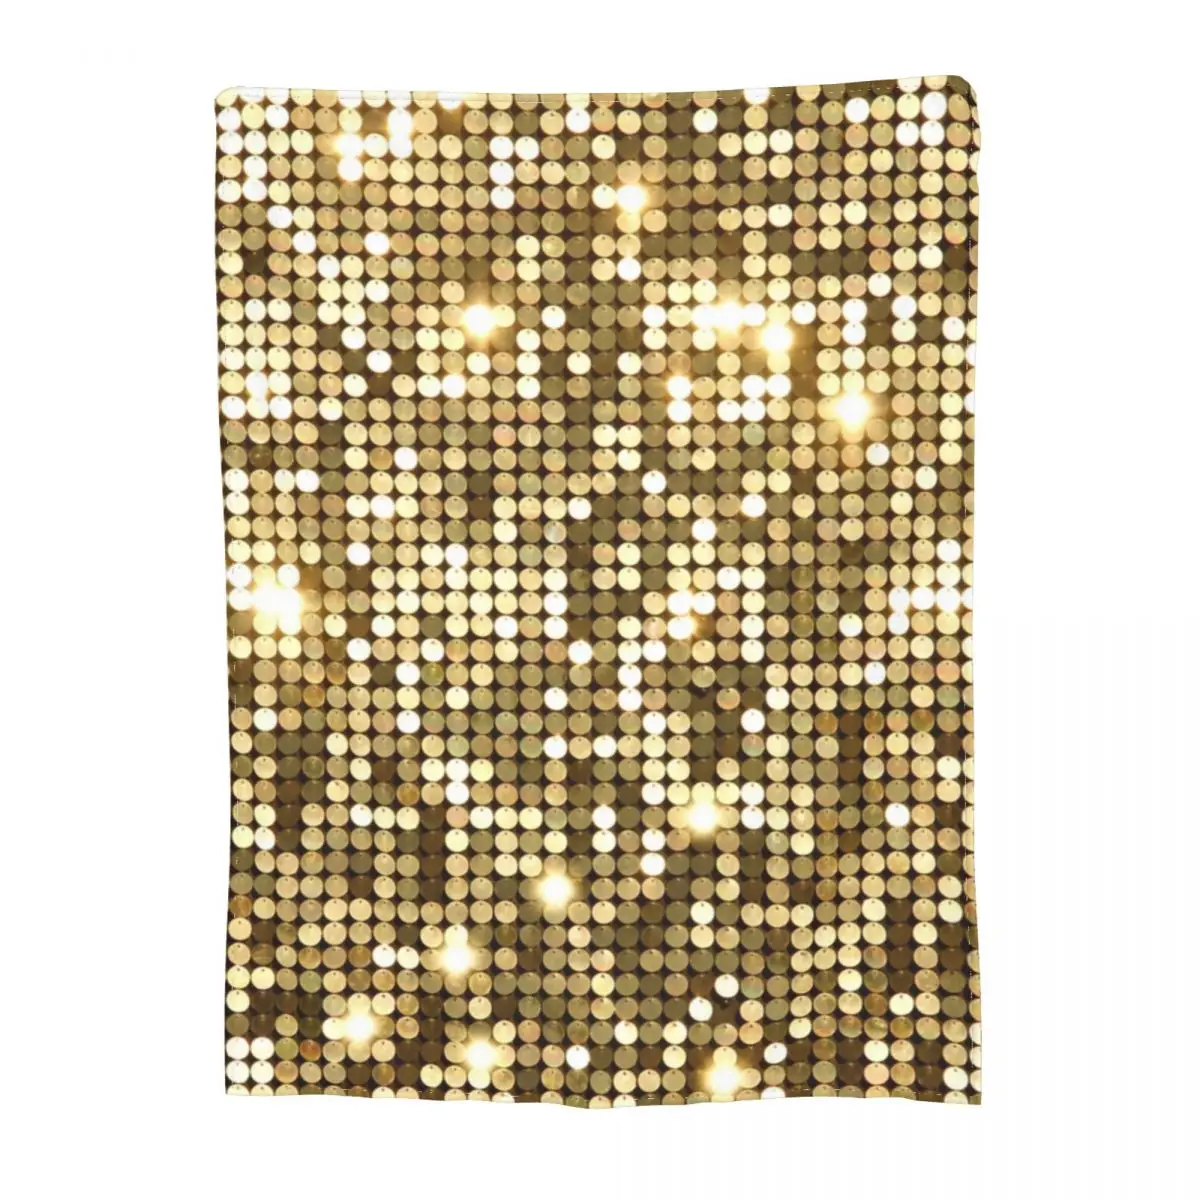 Golden Disco Ball Blanket Metallic Glitter Sparkles Fuzzy Fleece Blanket For Photo Shoot Soft Cheap Bedspread